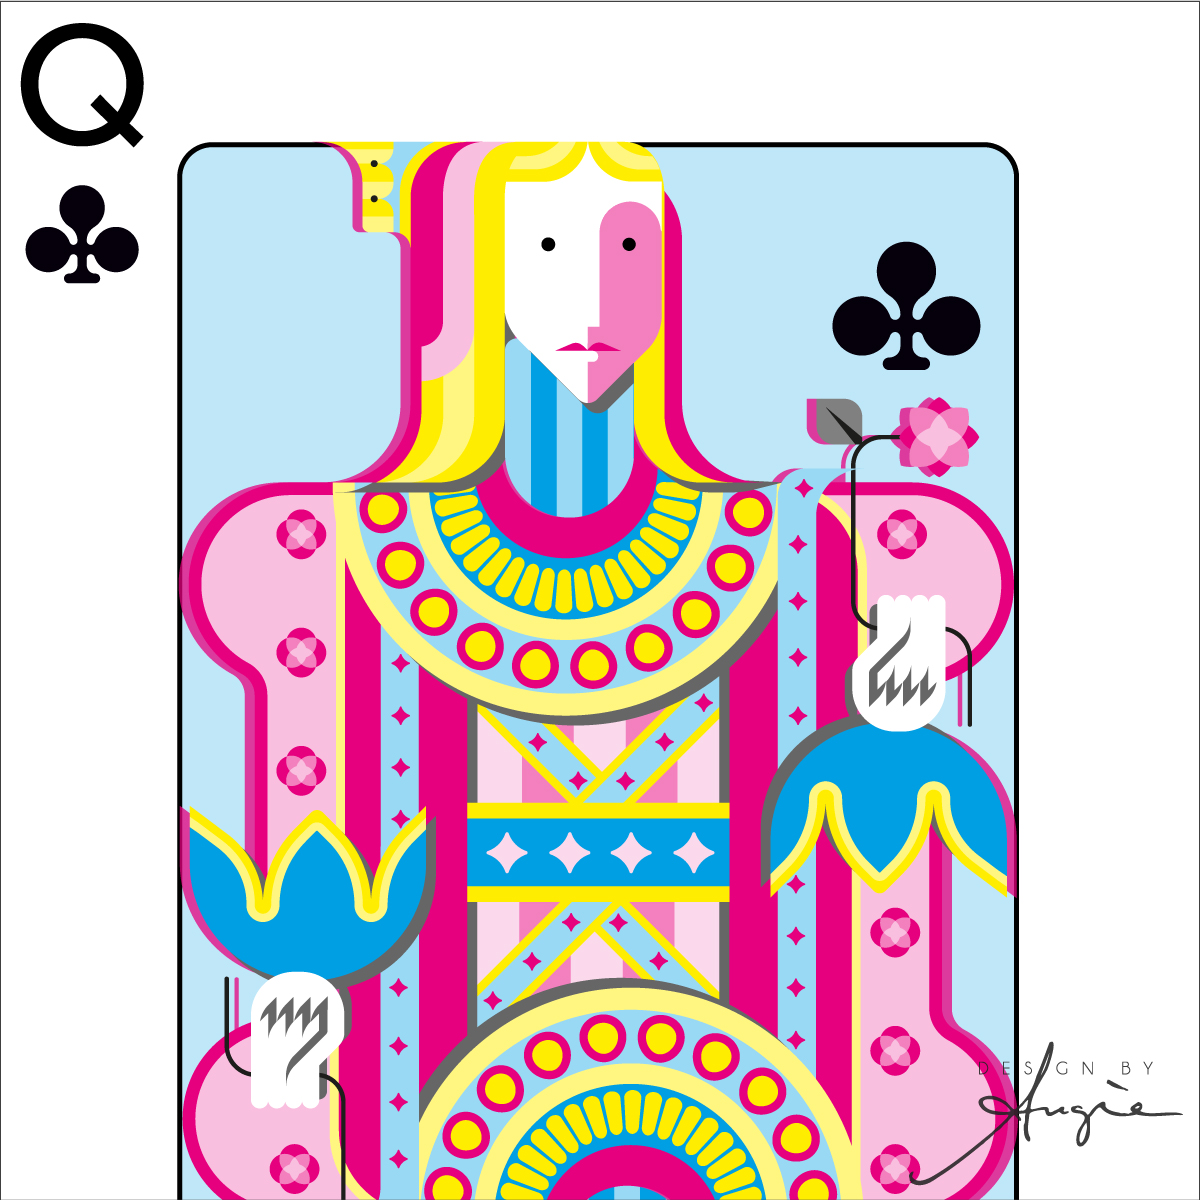 A Queen Card